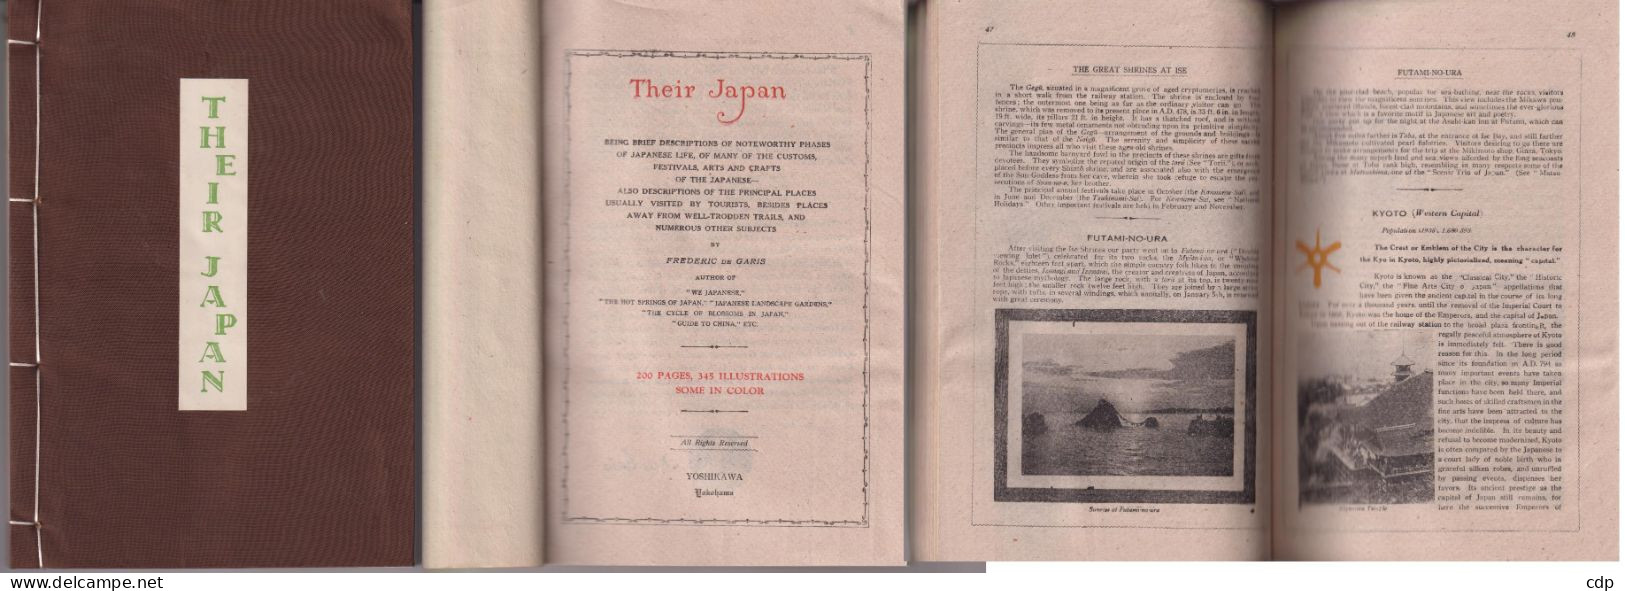 Their Japan   1936 - Asiatica